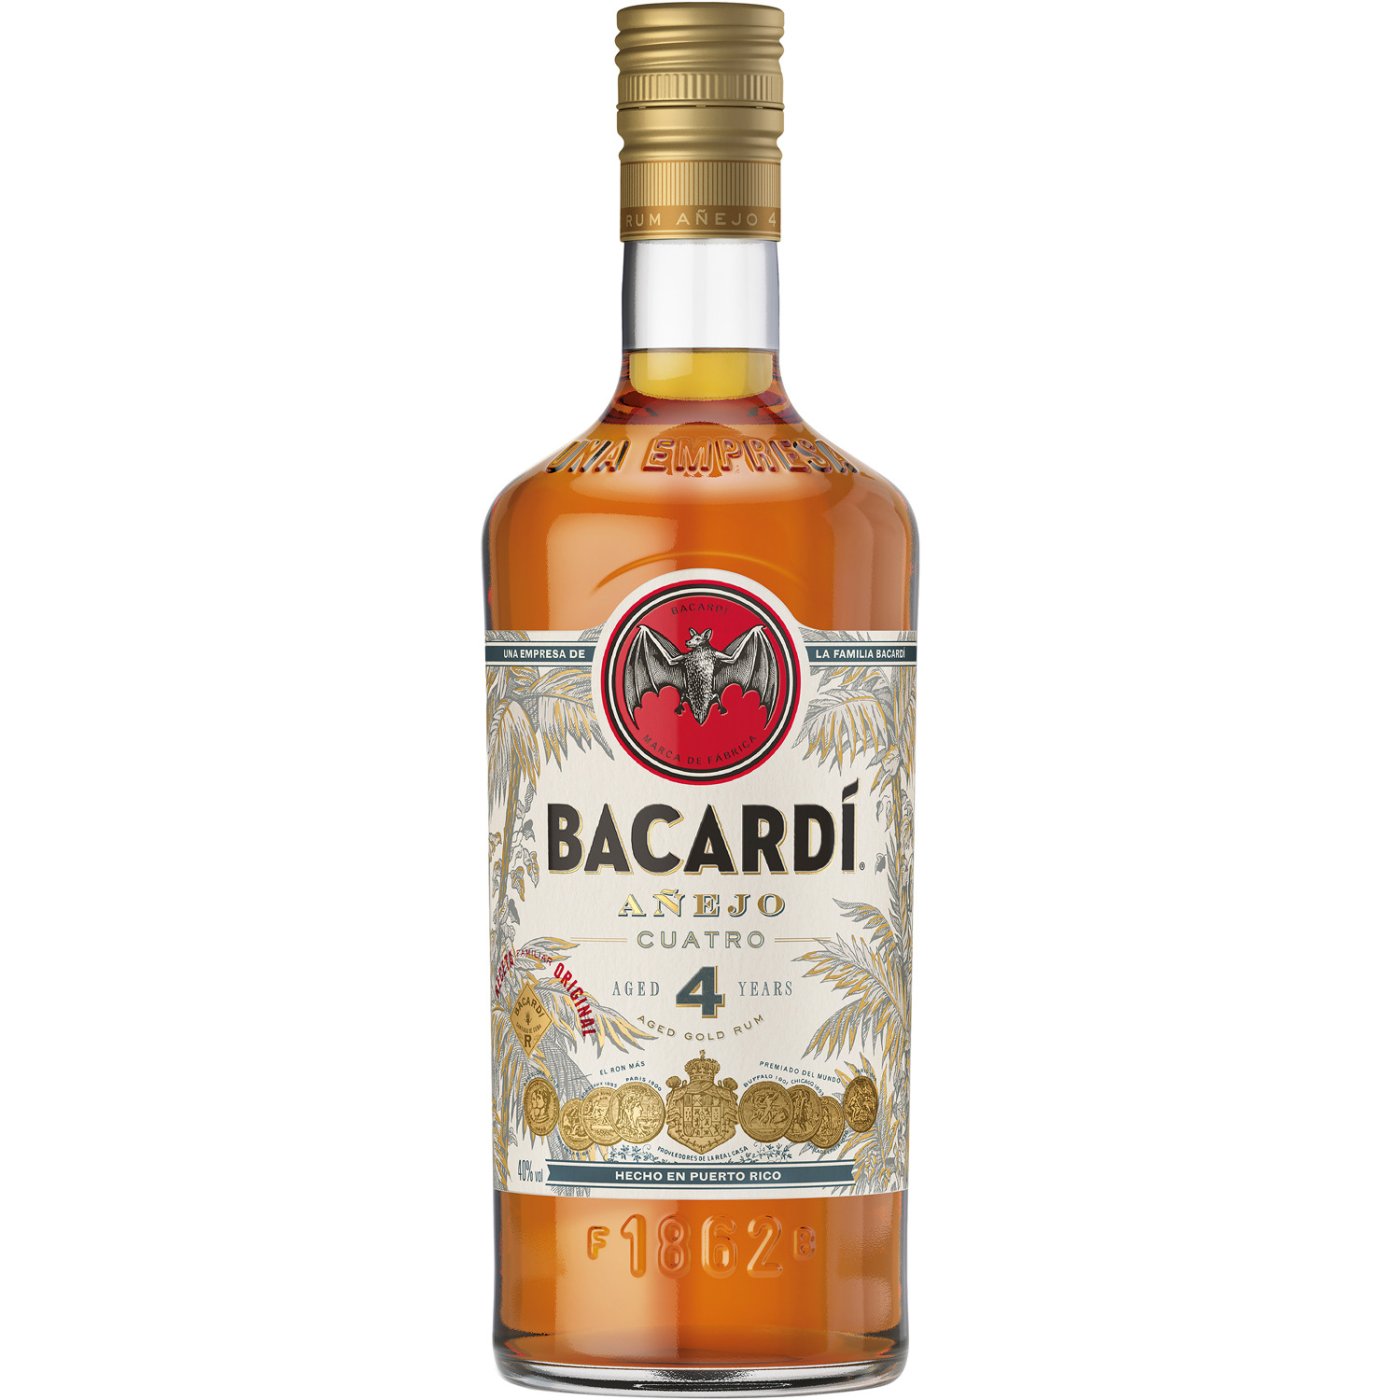 Bacardi - Anejo Cuatro, 4 years 70cl